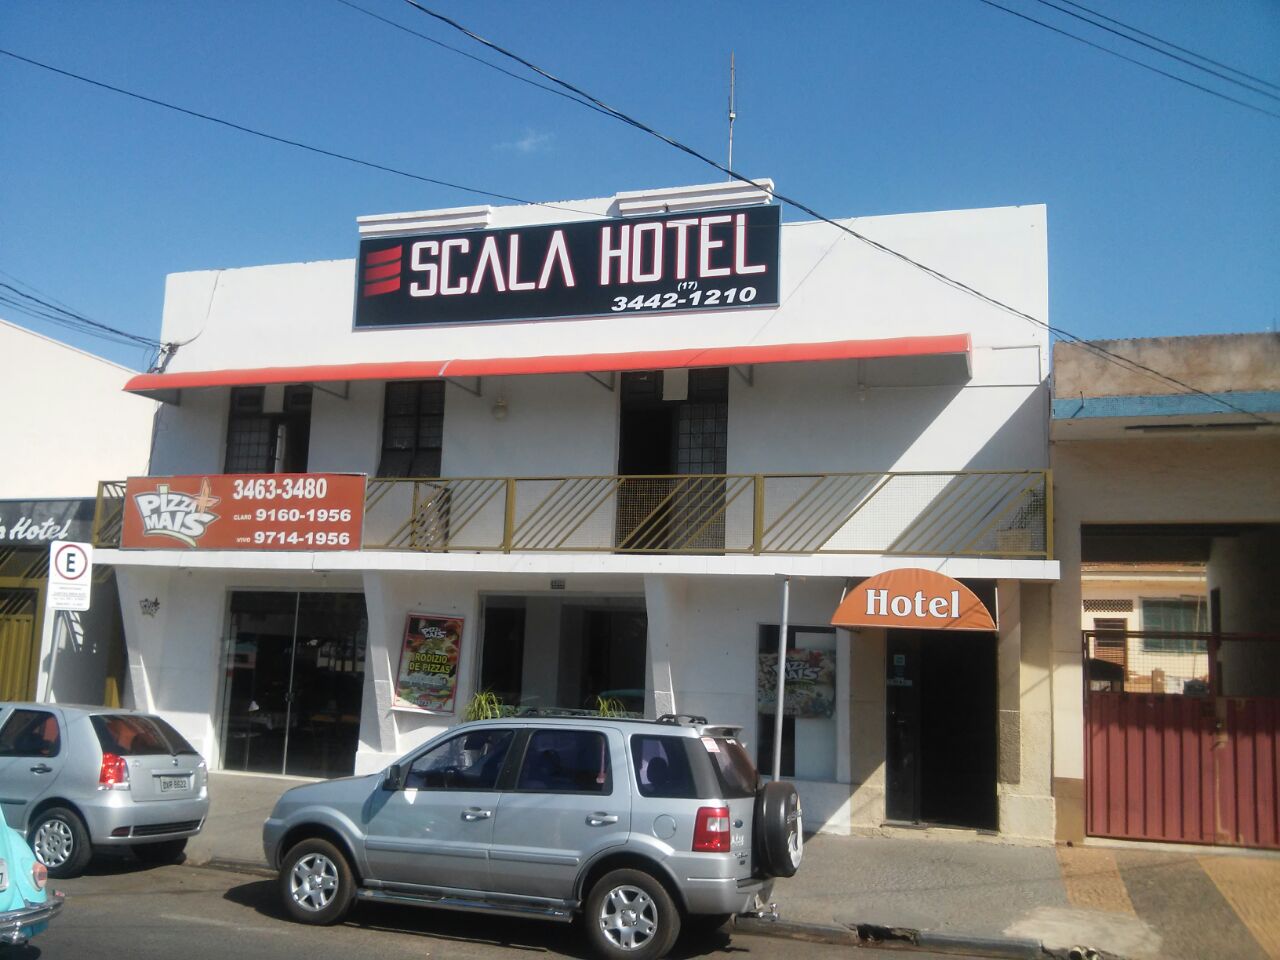 SCALA HOTEL - Hotéis - Fernandópolis, SP